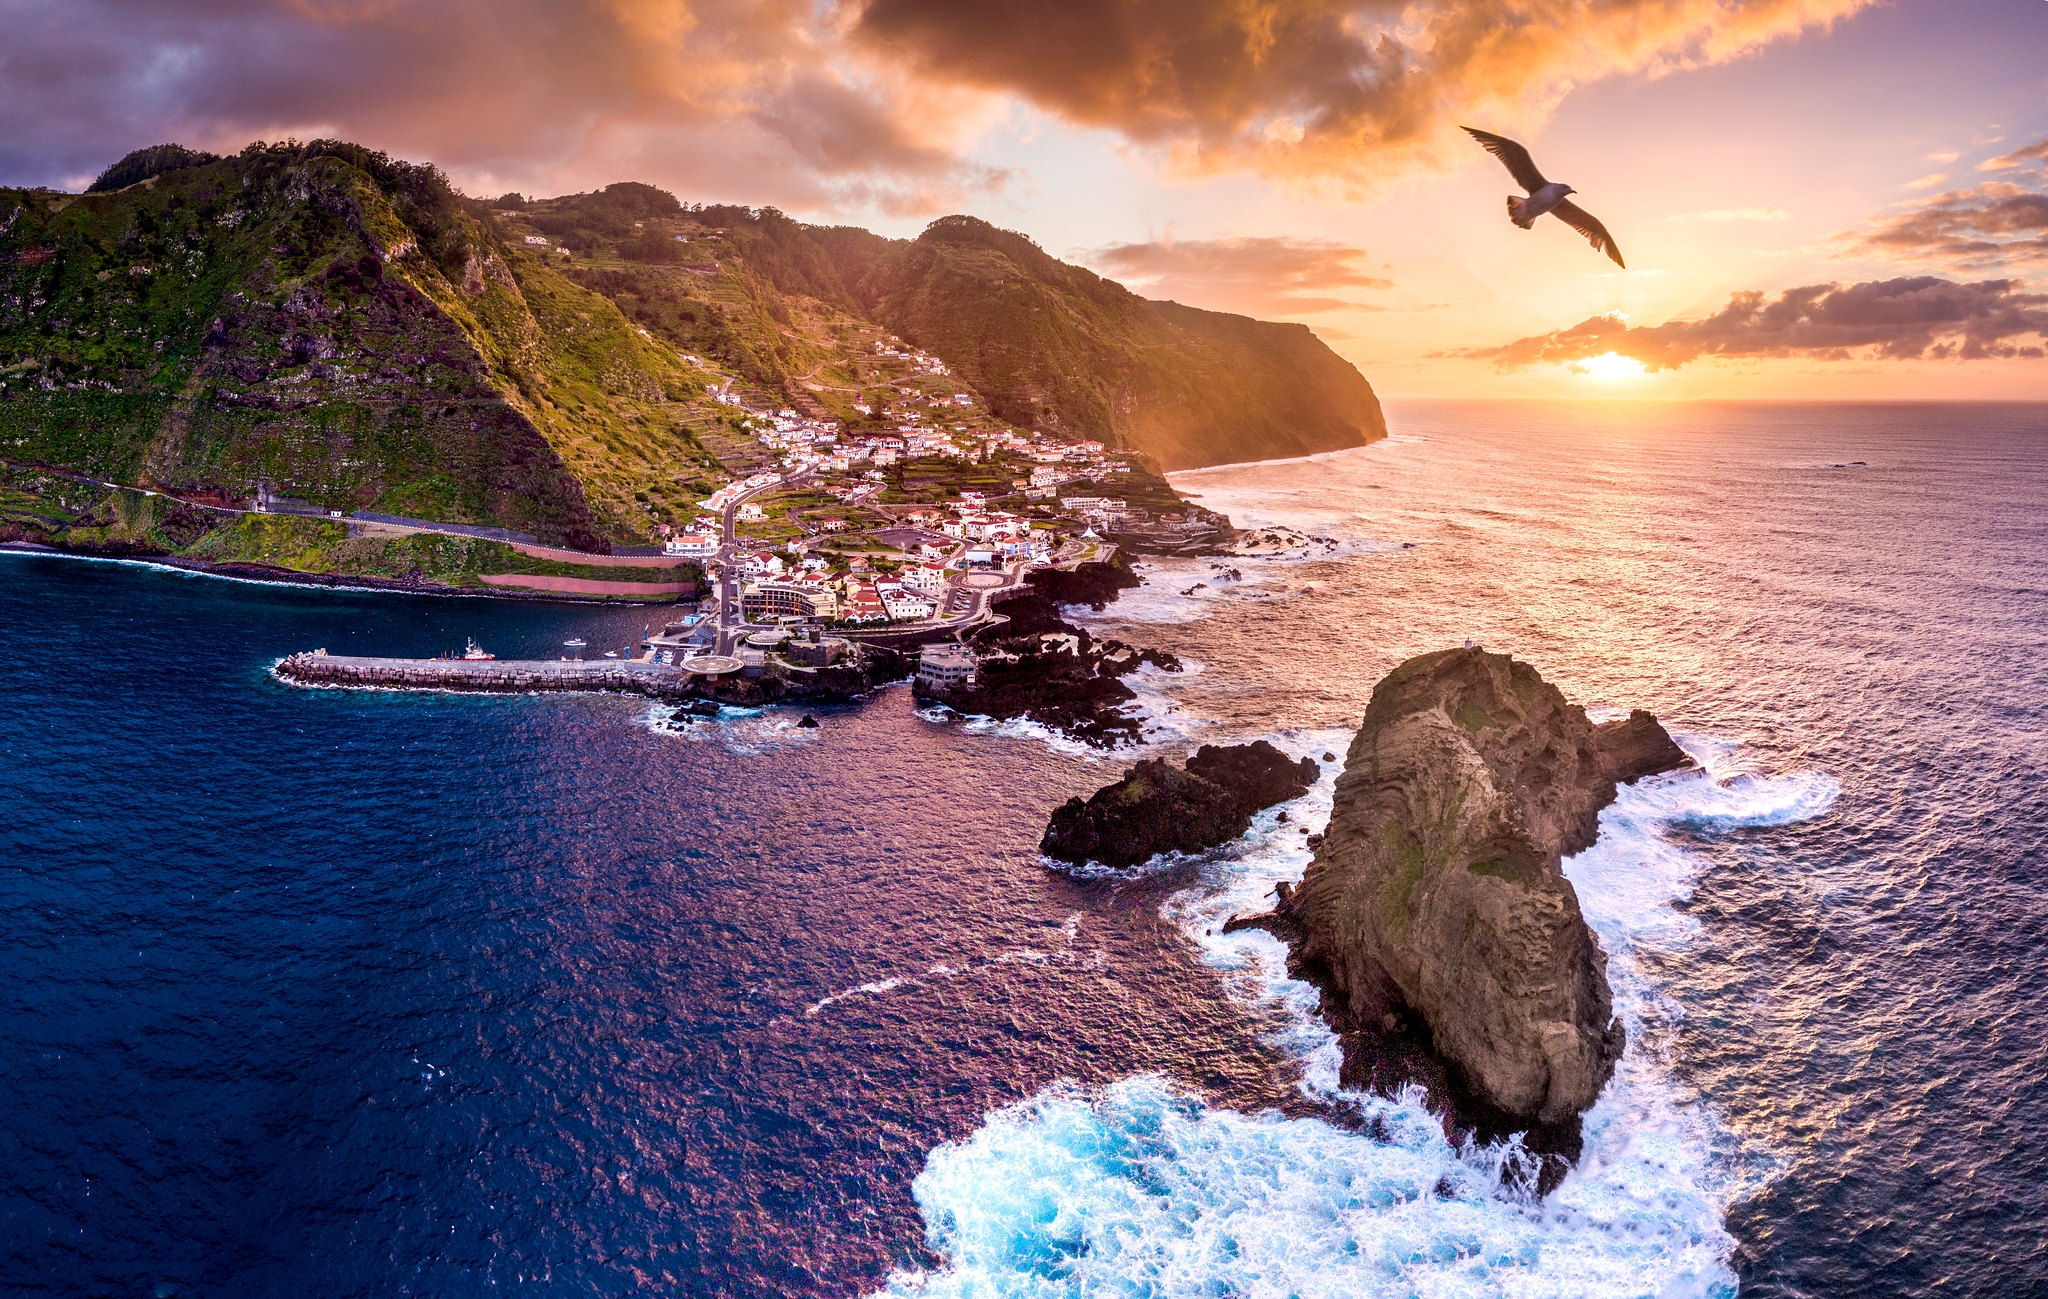 Остров Мадейра, Атлантический океан, 30 августа 1864 года.